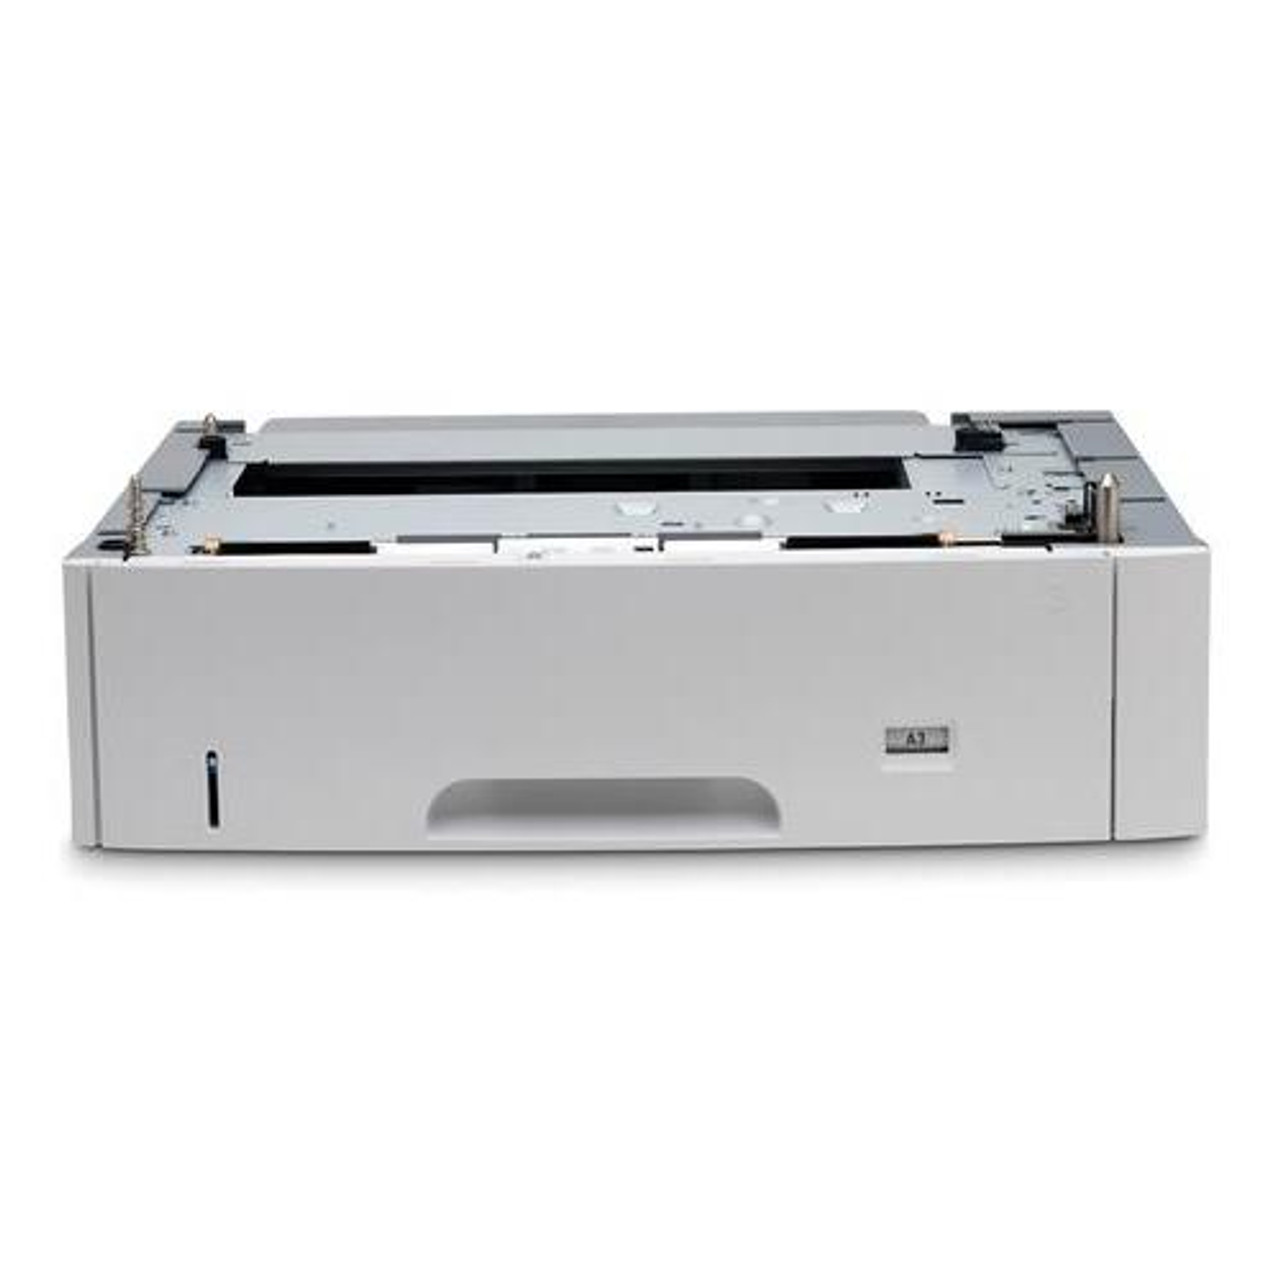 RG5-6647-000 - HP Standard 500-Sheets Paper Cassette Tray 2 Paper Cassette Assembly for Color LaserJet 5500 Printer